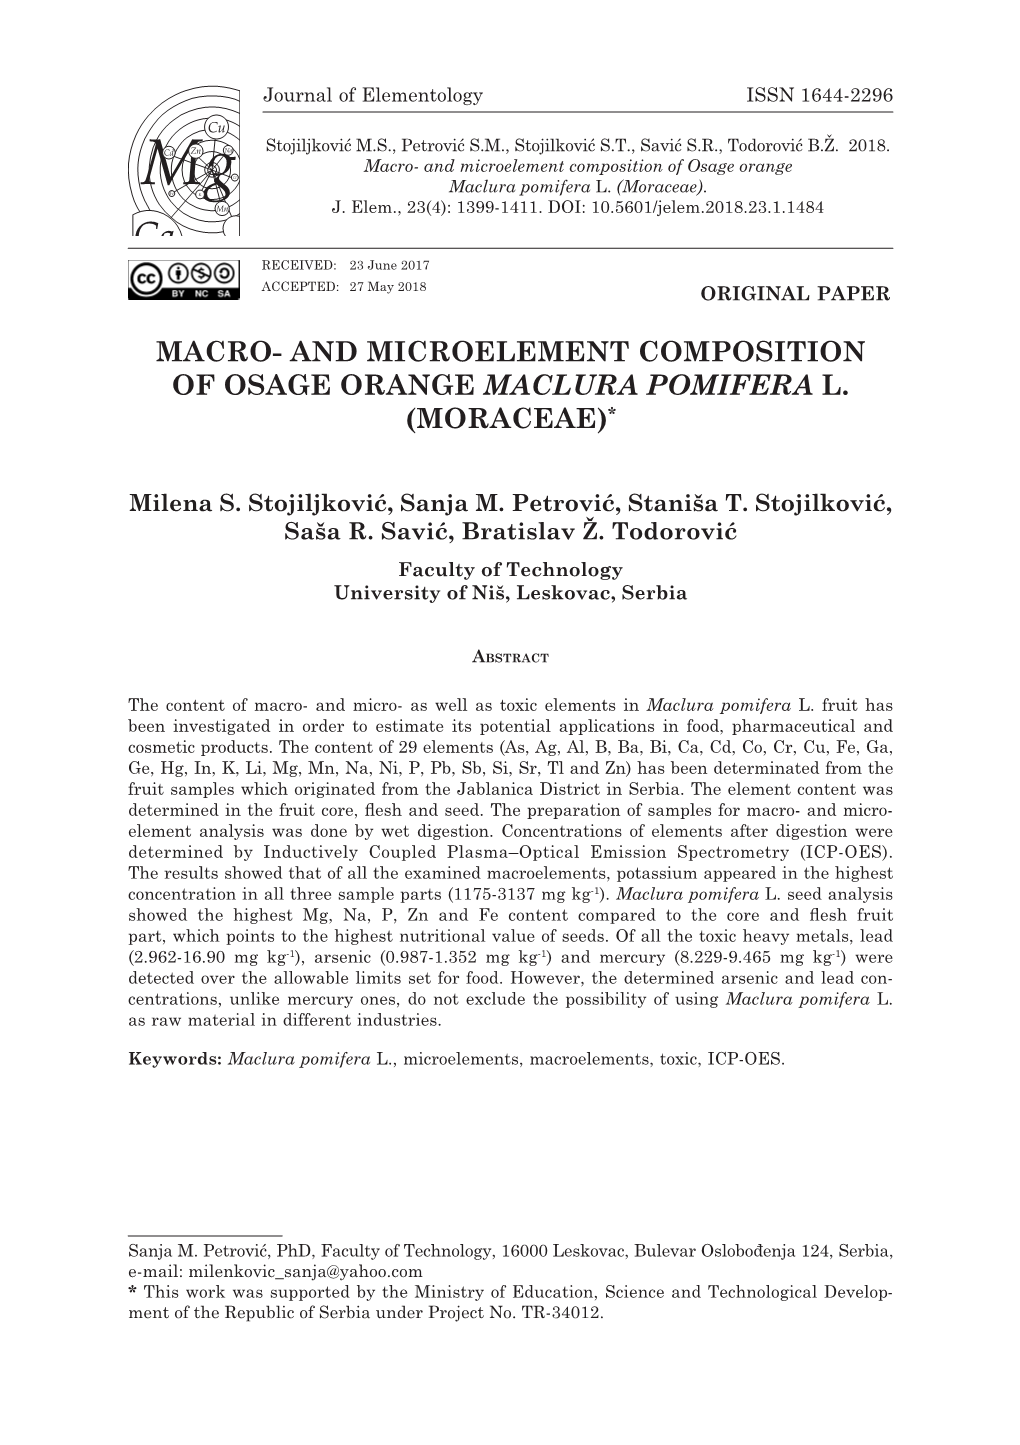 Macro- and Microelement Composition of Osage Orange Maclura Pomifera L